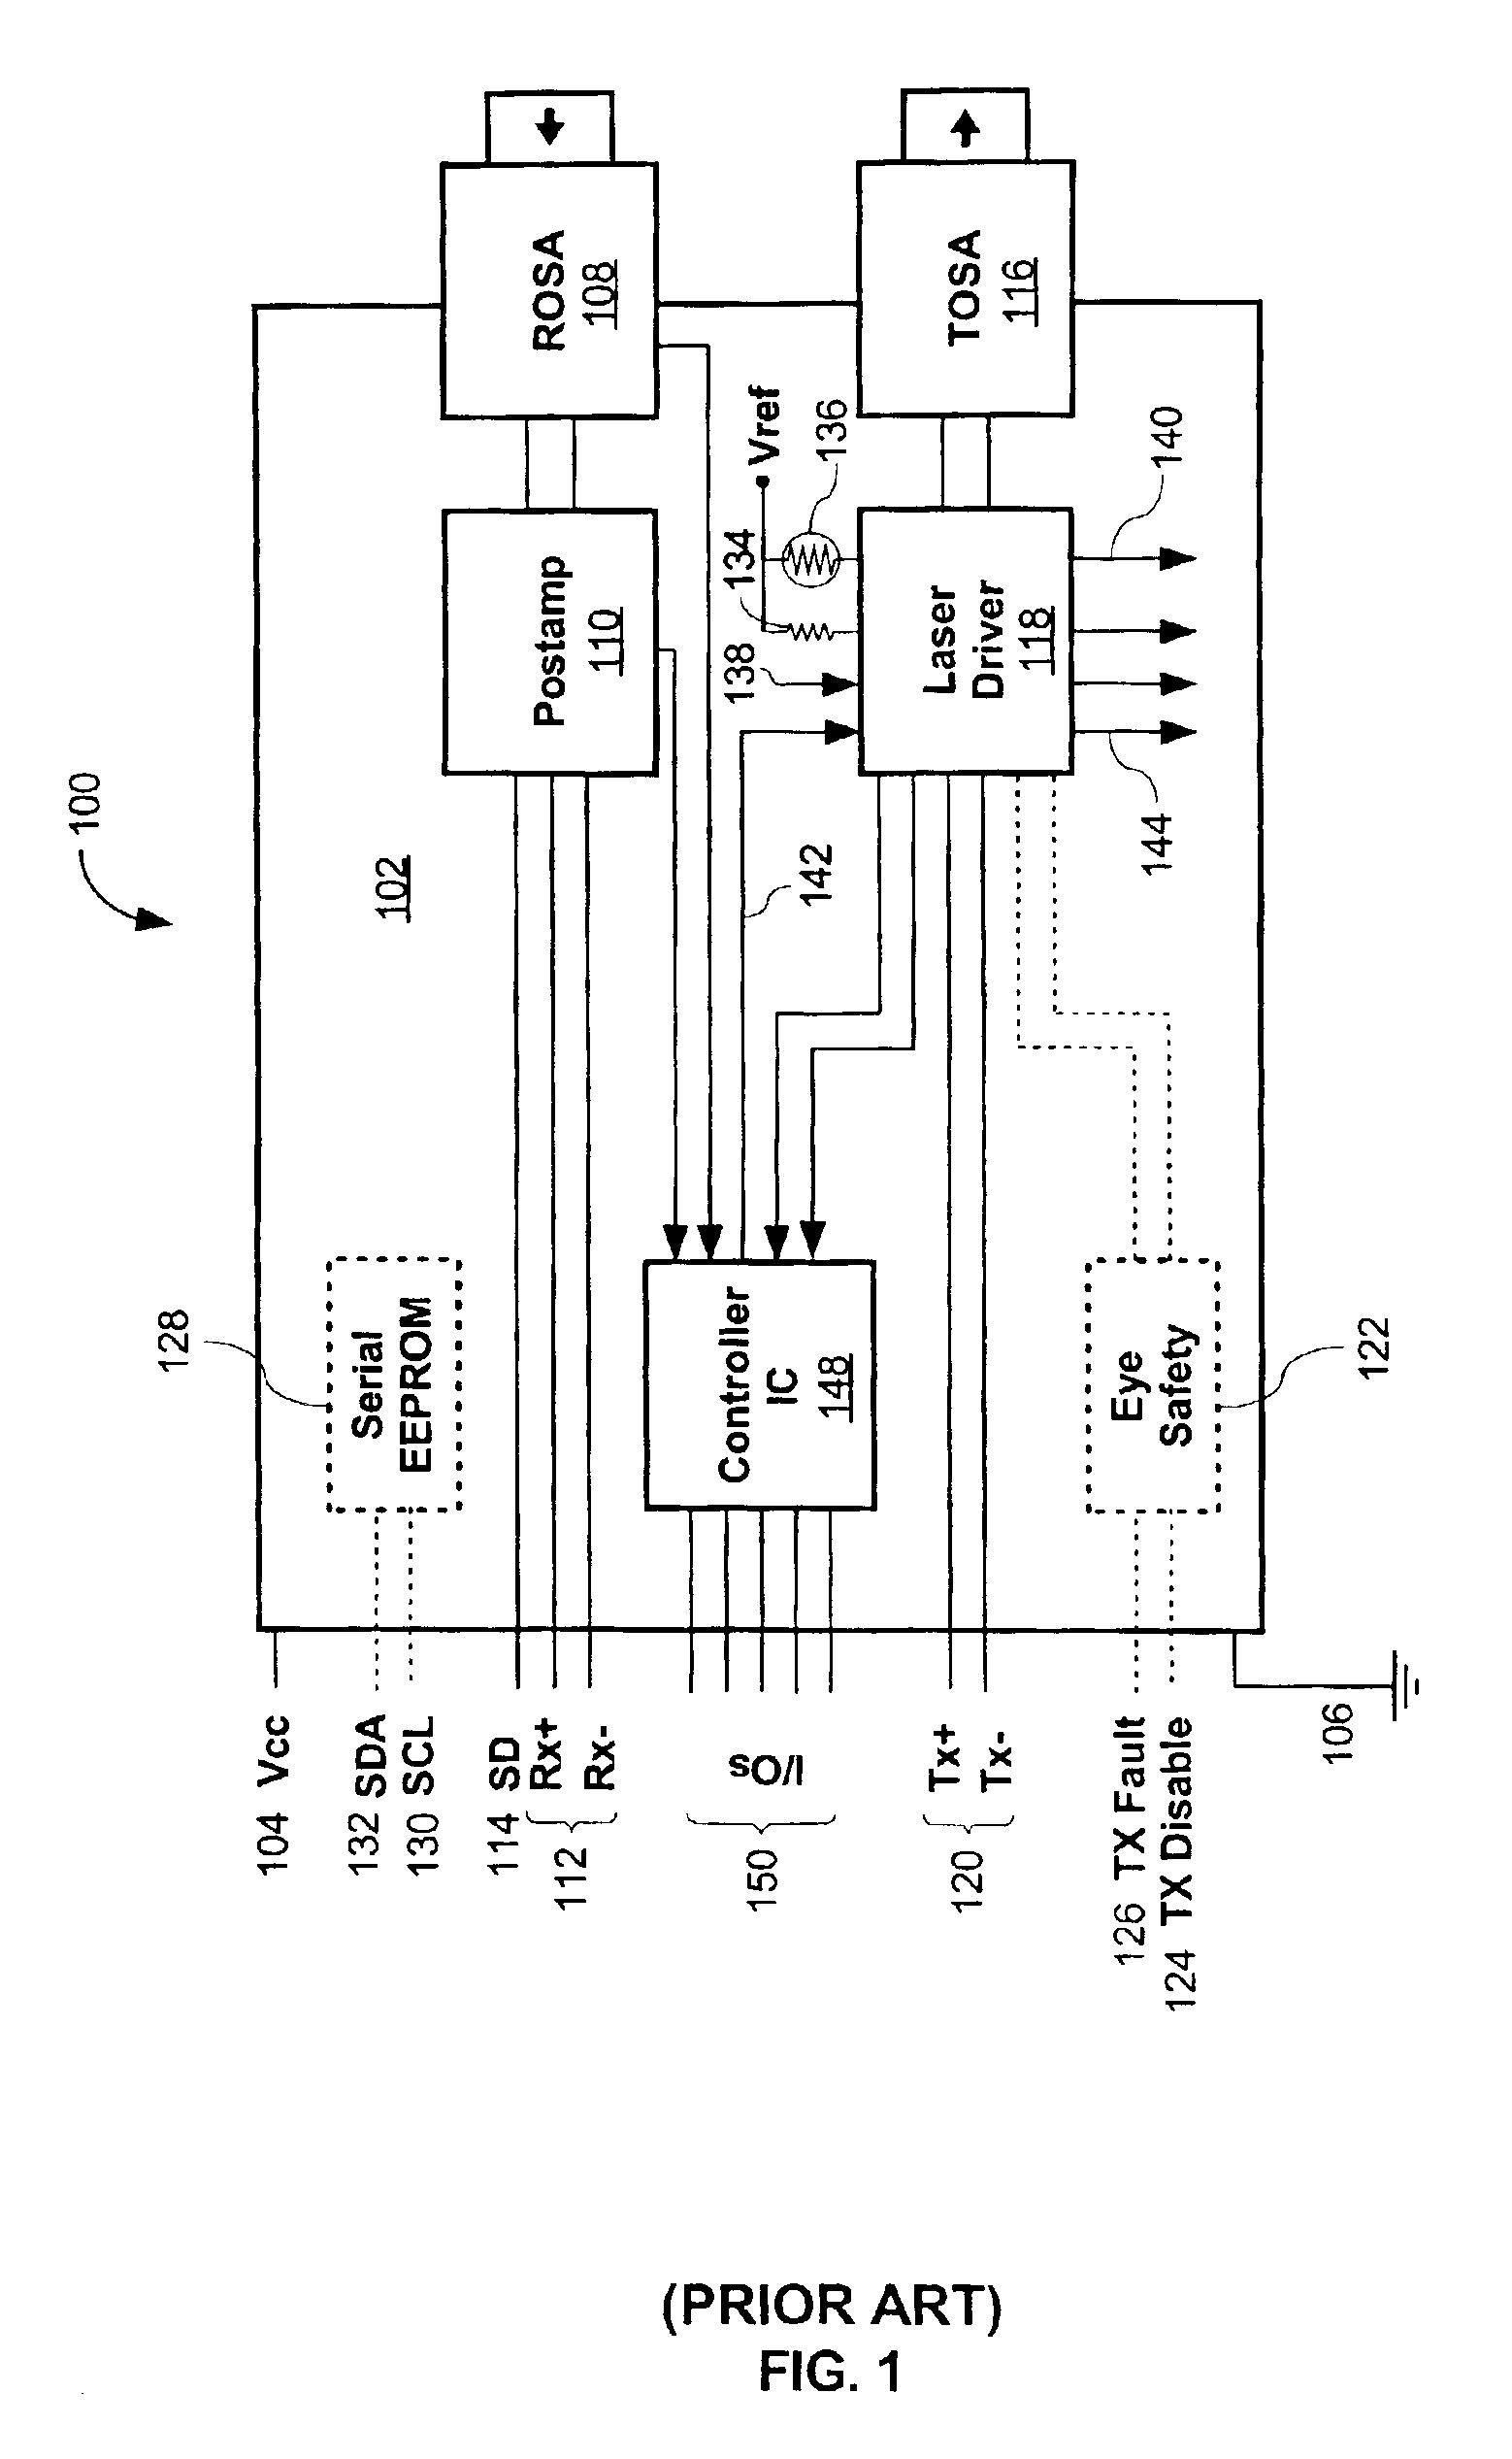 Optical transceiver module with multipurpose internal serial bus